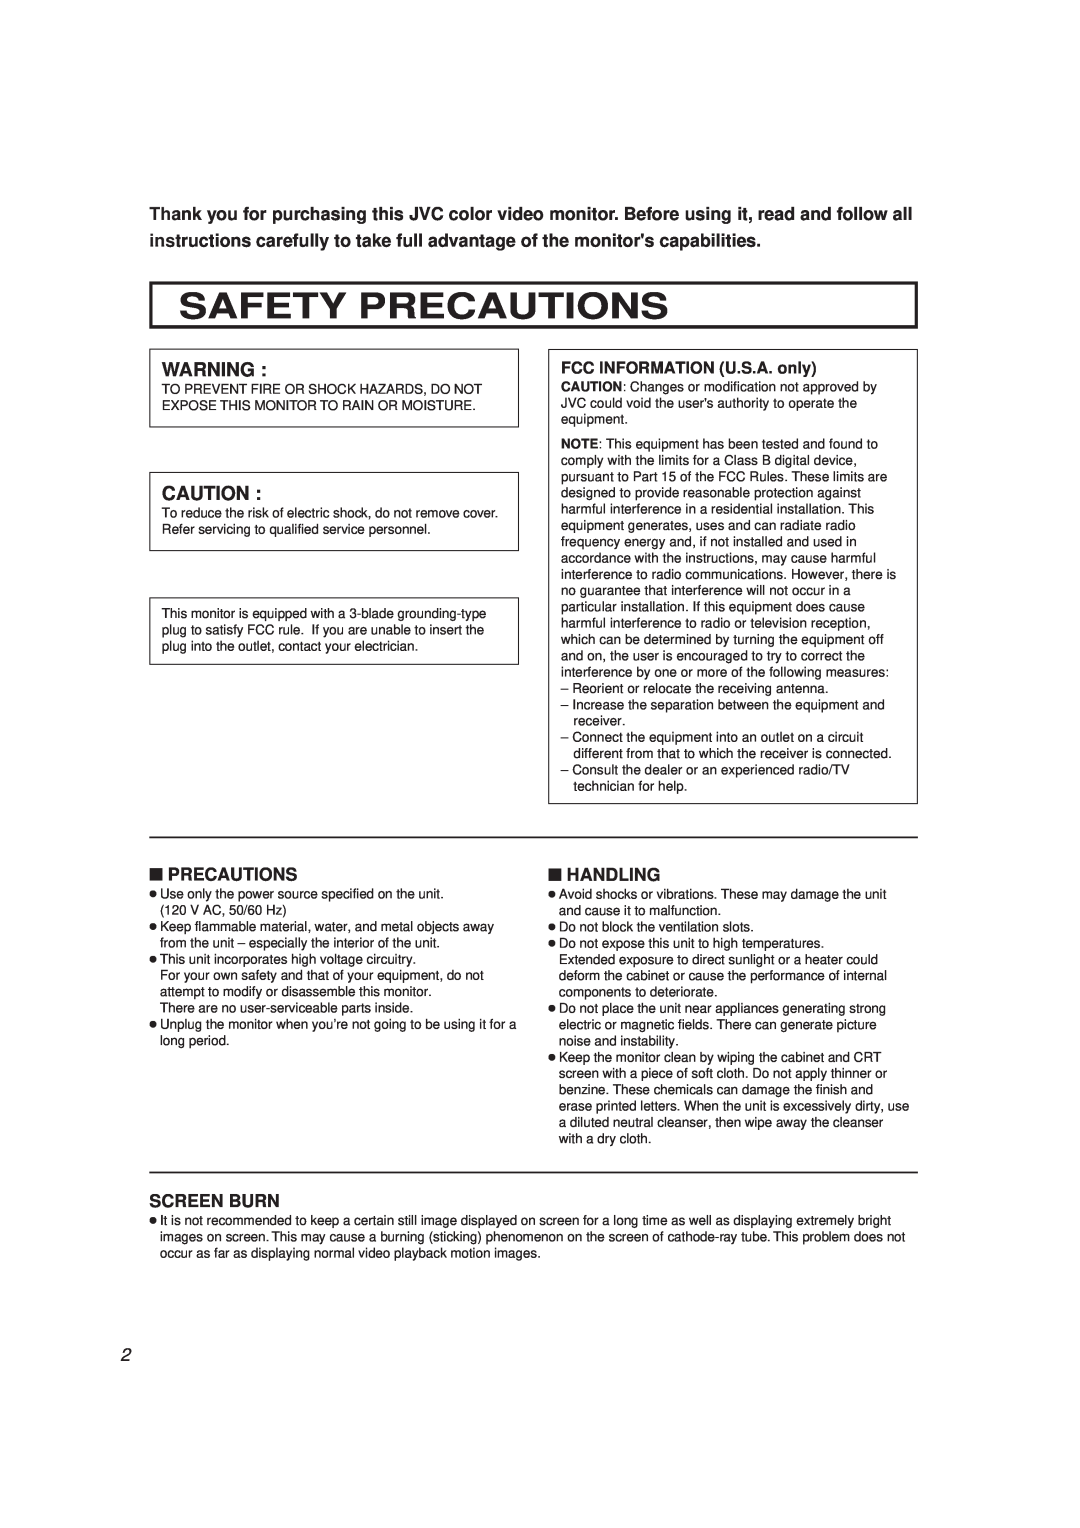 JVC TM-A130SU manual Safety Precautions, Handling, Screen Burn 